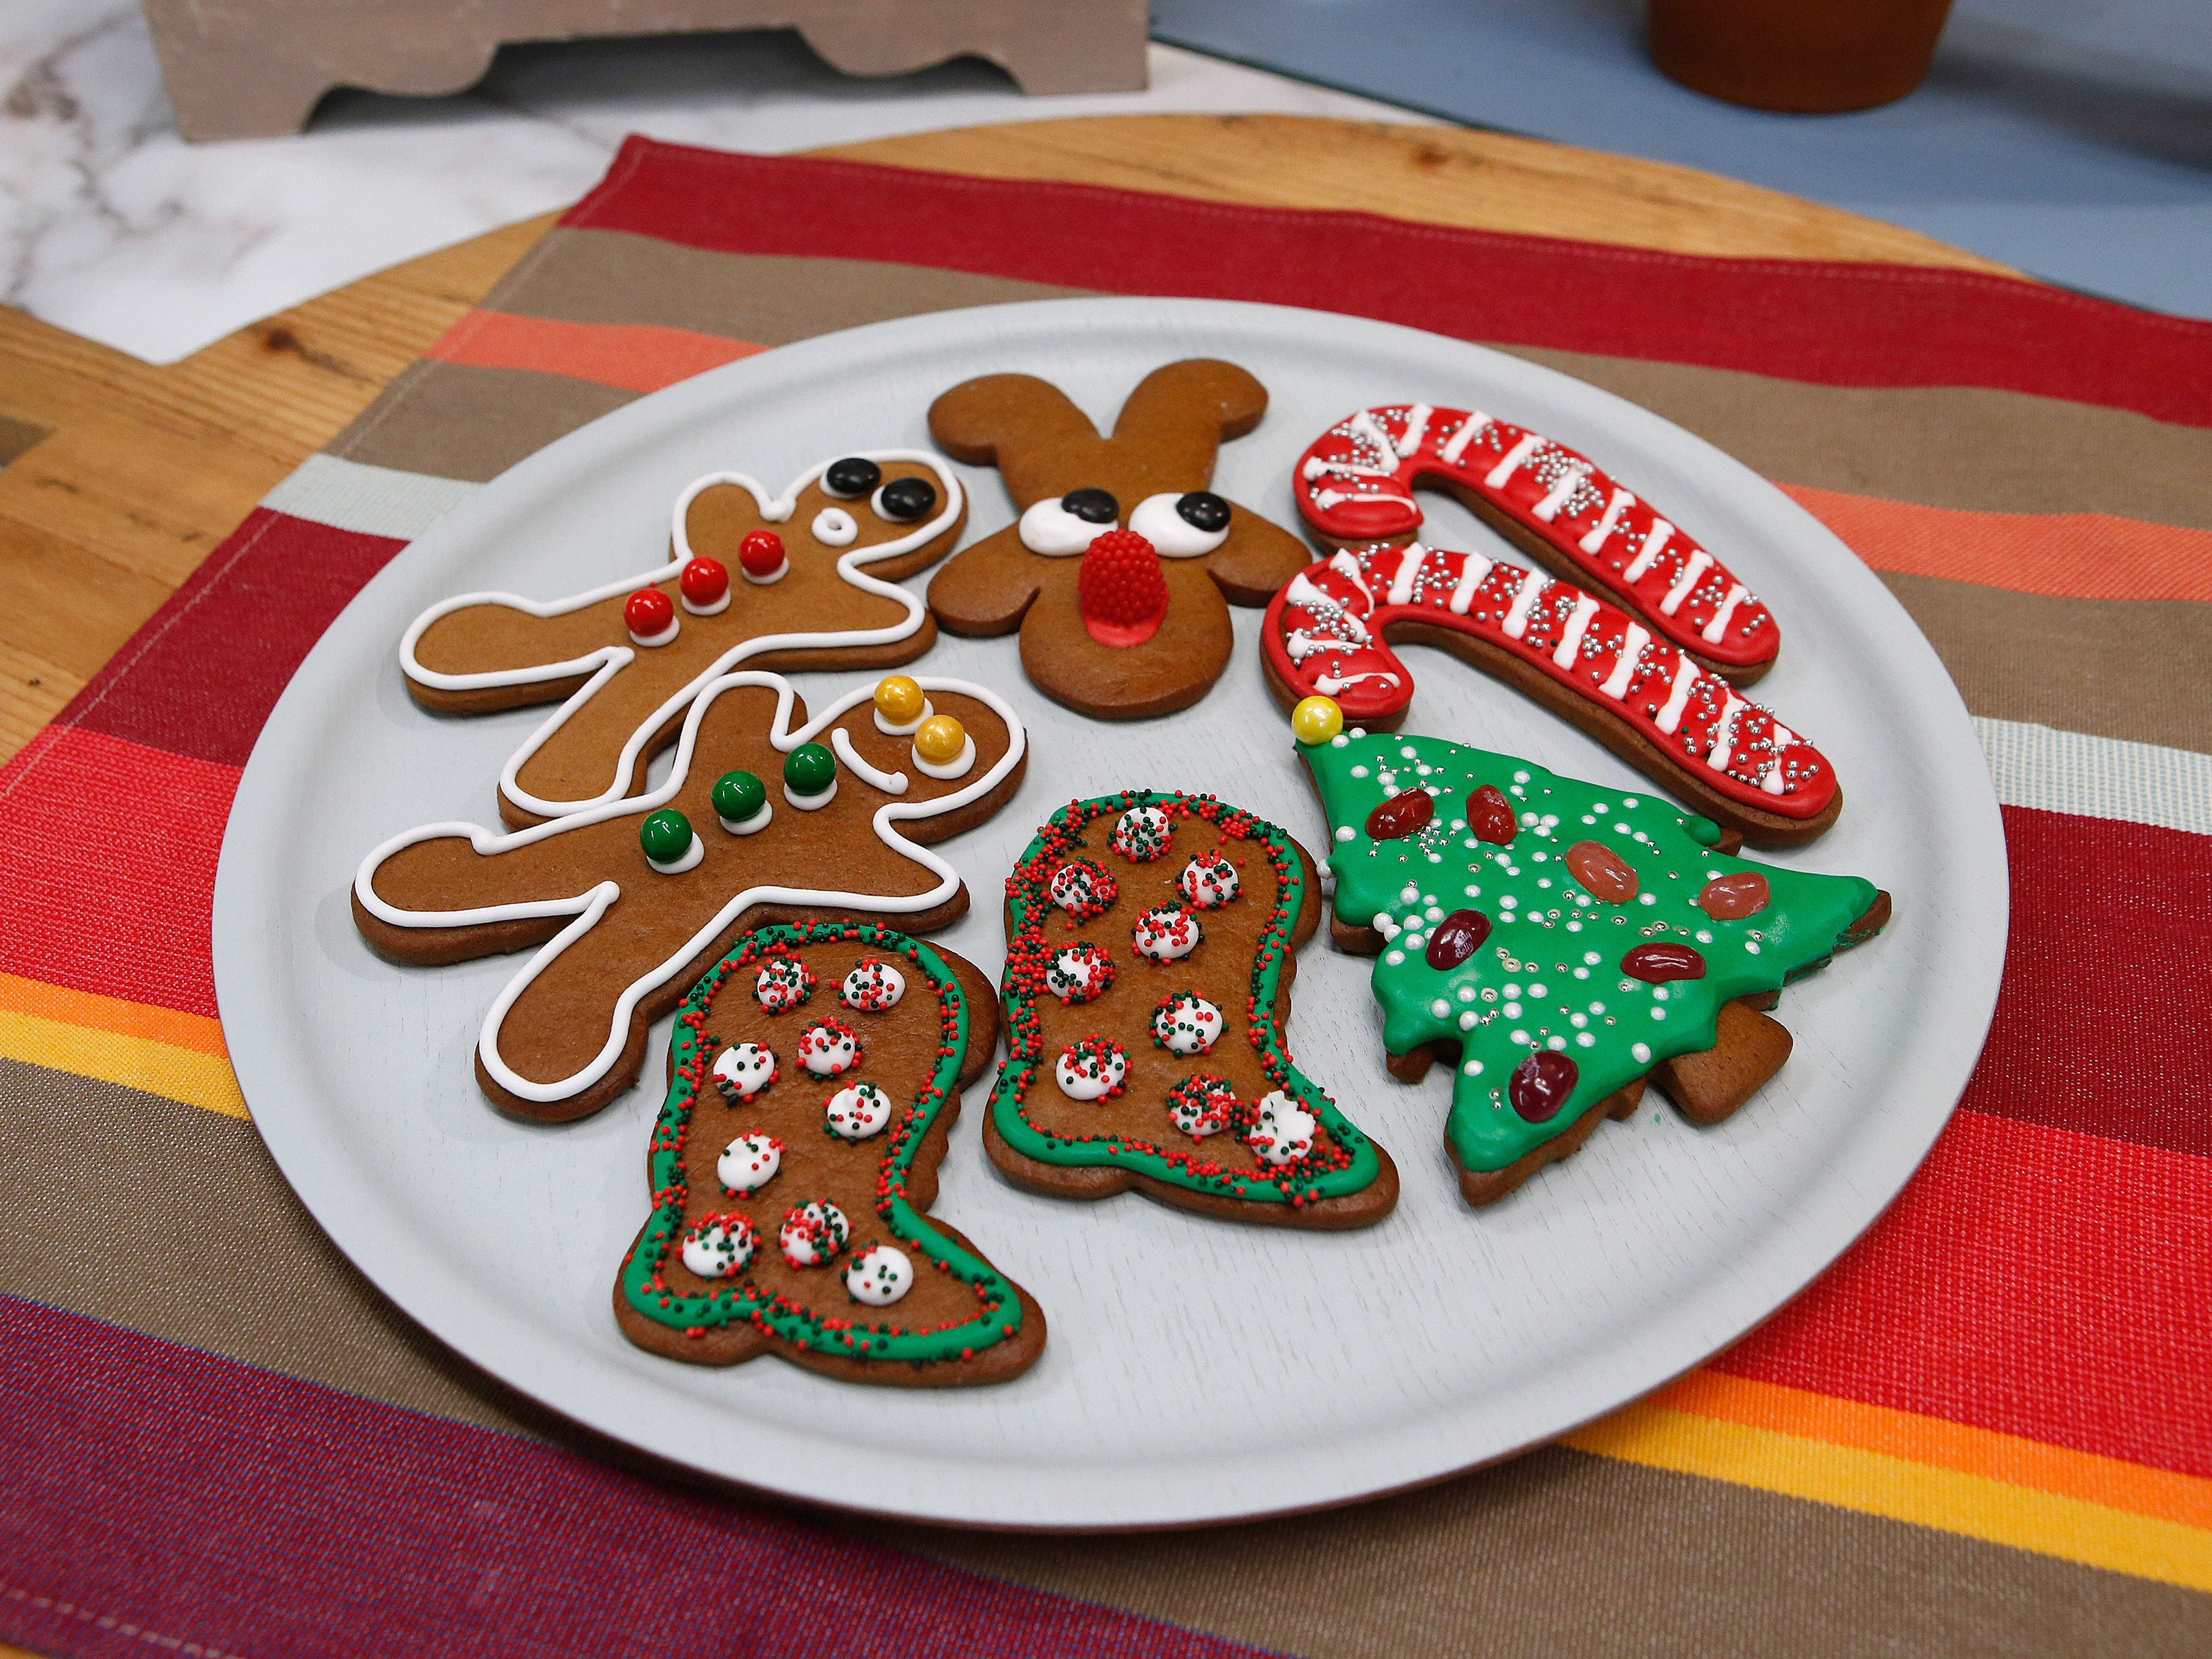 Trisha Yearwood Christmas Cookies
 Gingerbread Cookies recipe from Duff Goldman via Food